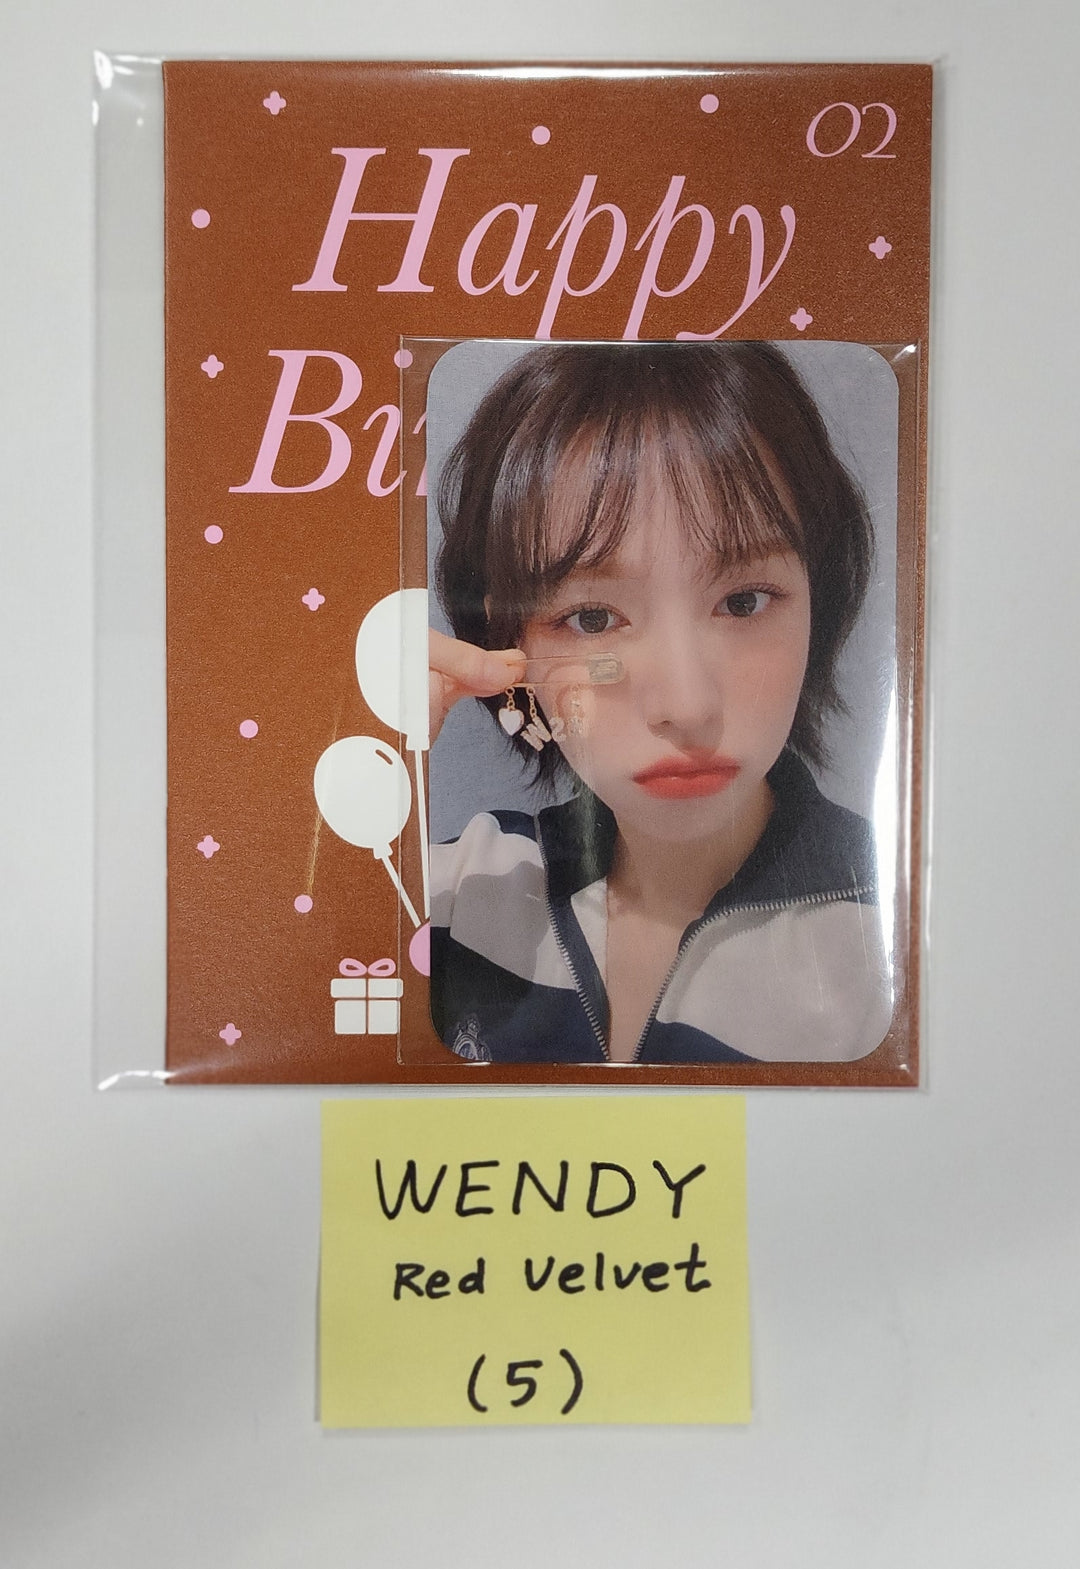 Wendy (Of Red Velvet) "Birthday" - SMtown & Store Birthday Card